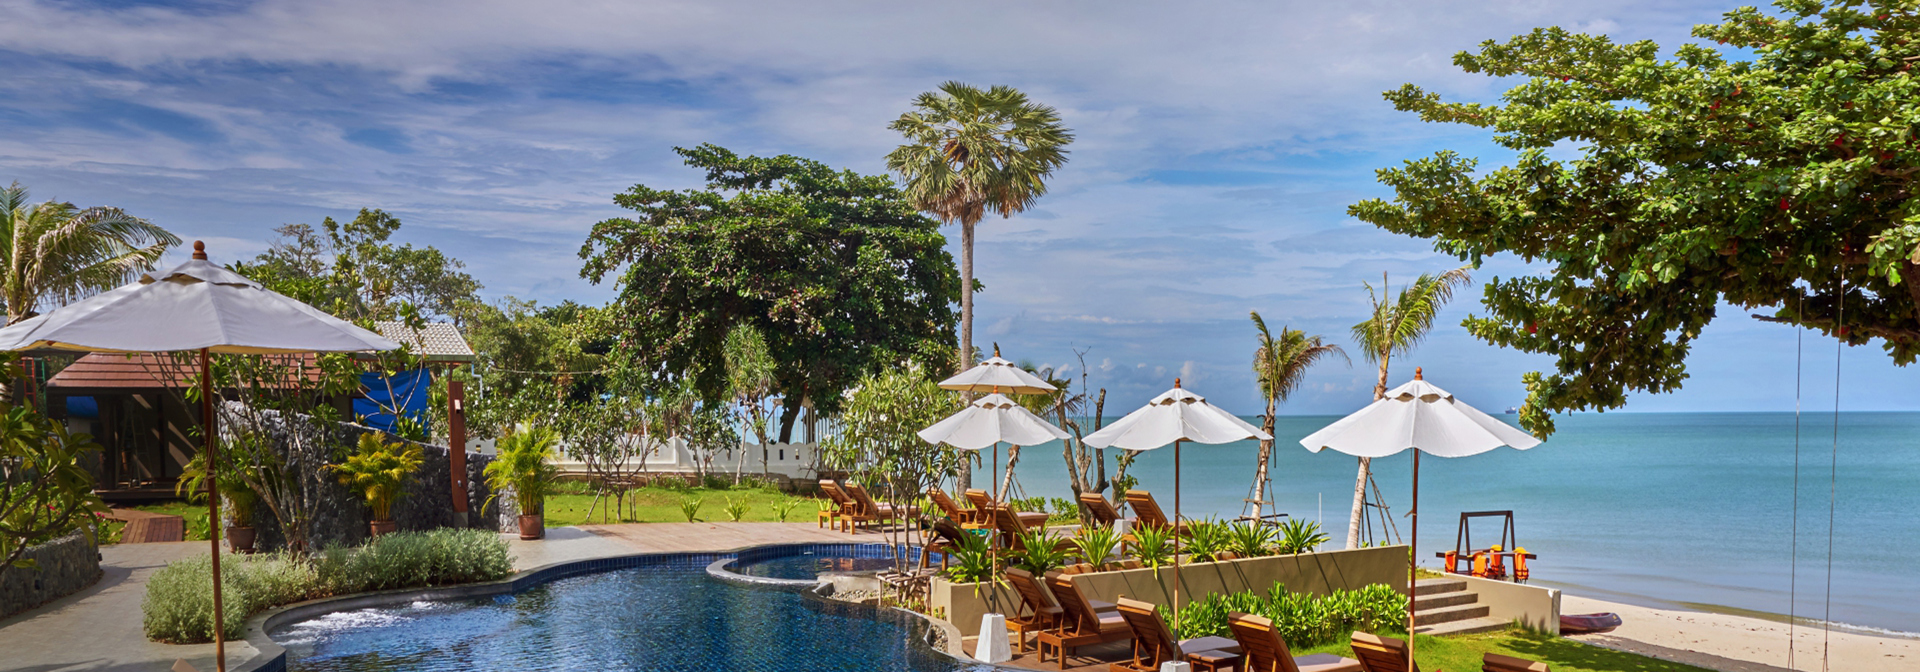 Hanom Beach Resort And Spa Pool 09